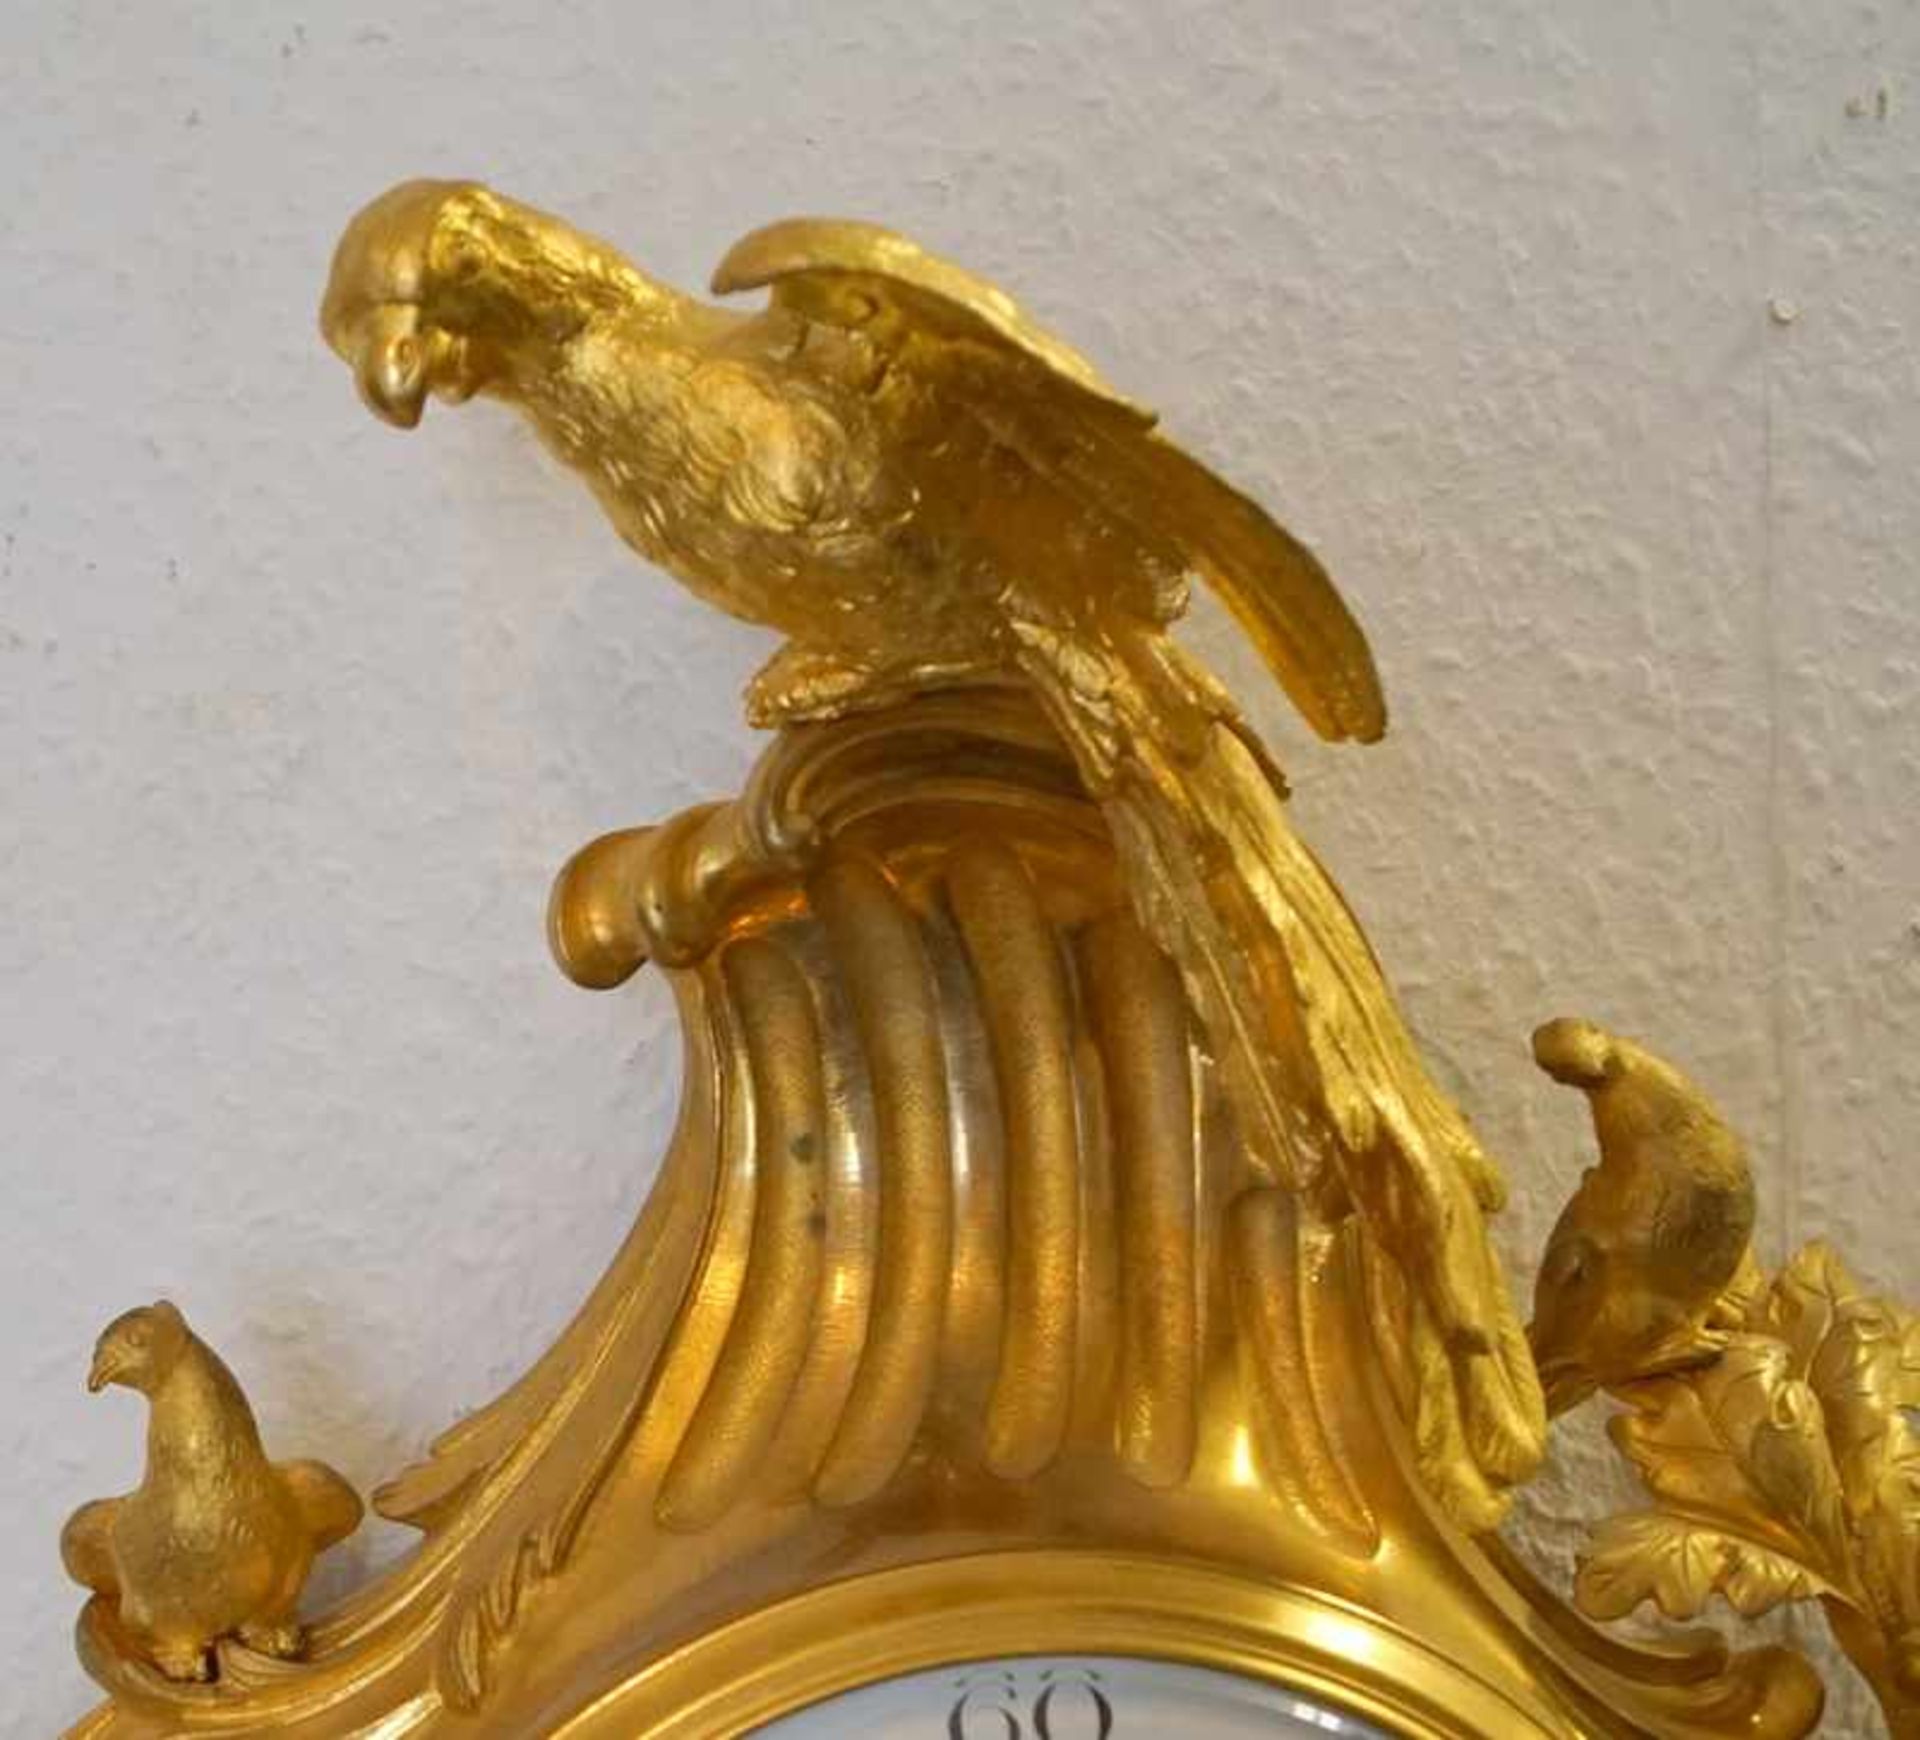 Große feuervergoldete Carteluhr, Rokoko-Stil, Ende 19. Jhd. Bronze feuervergoldet, großes bewegt - Image 2 of 3